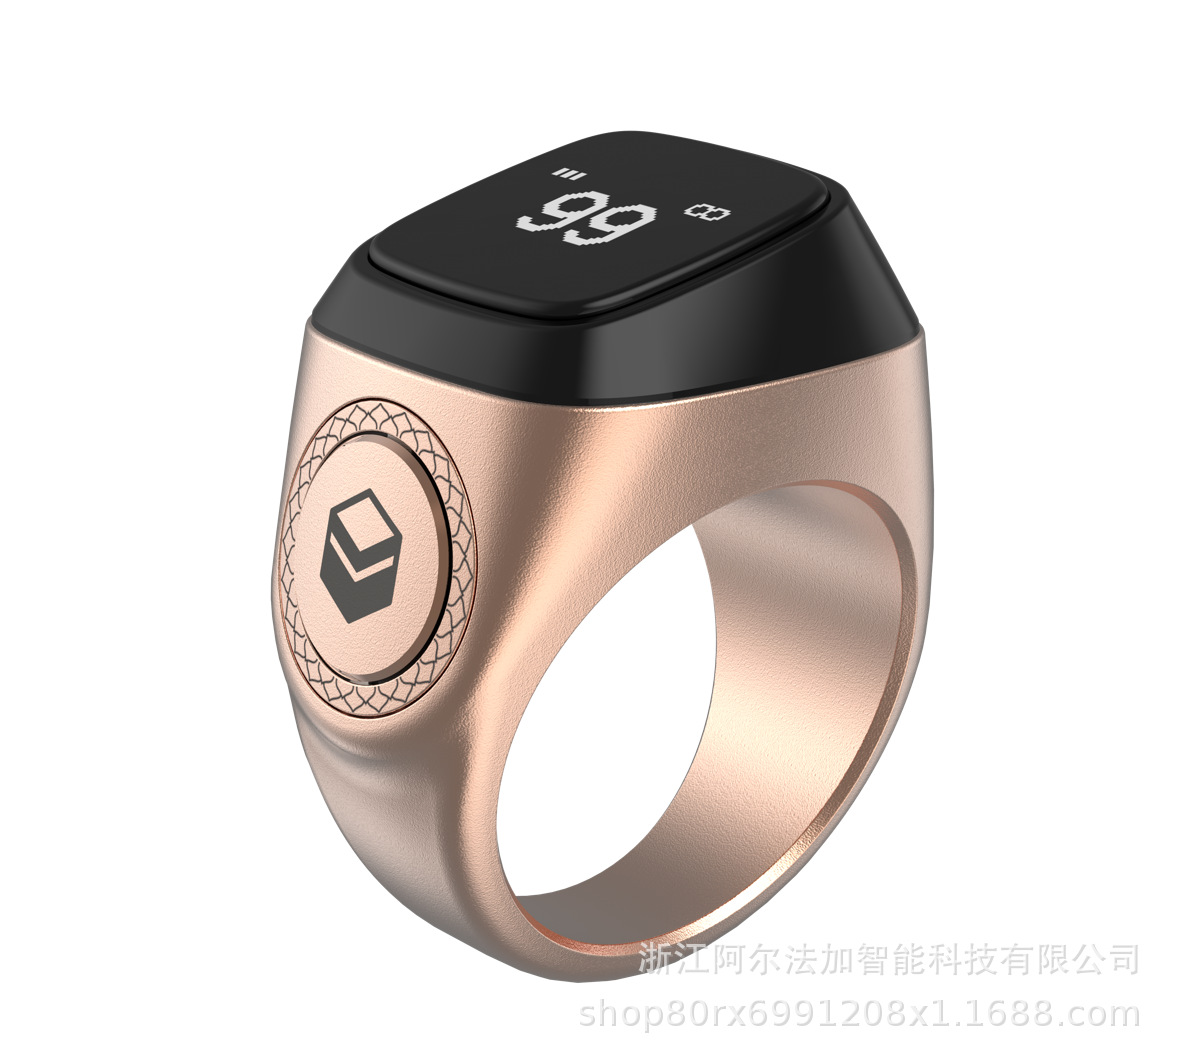 Muslim smart ring with tasbih beads function智能戒指蓝计数器